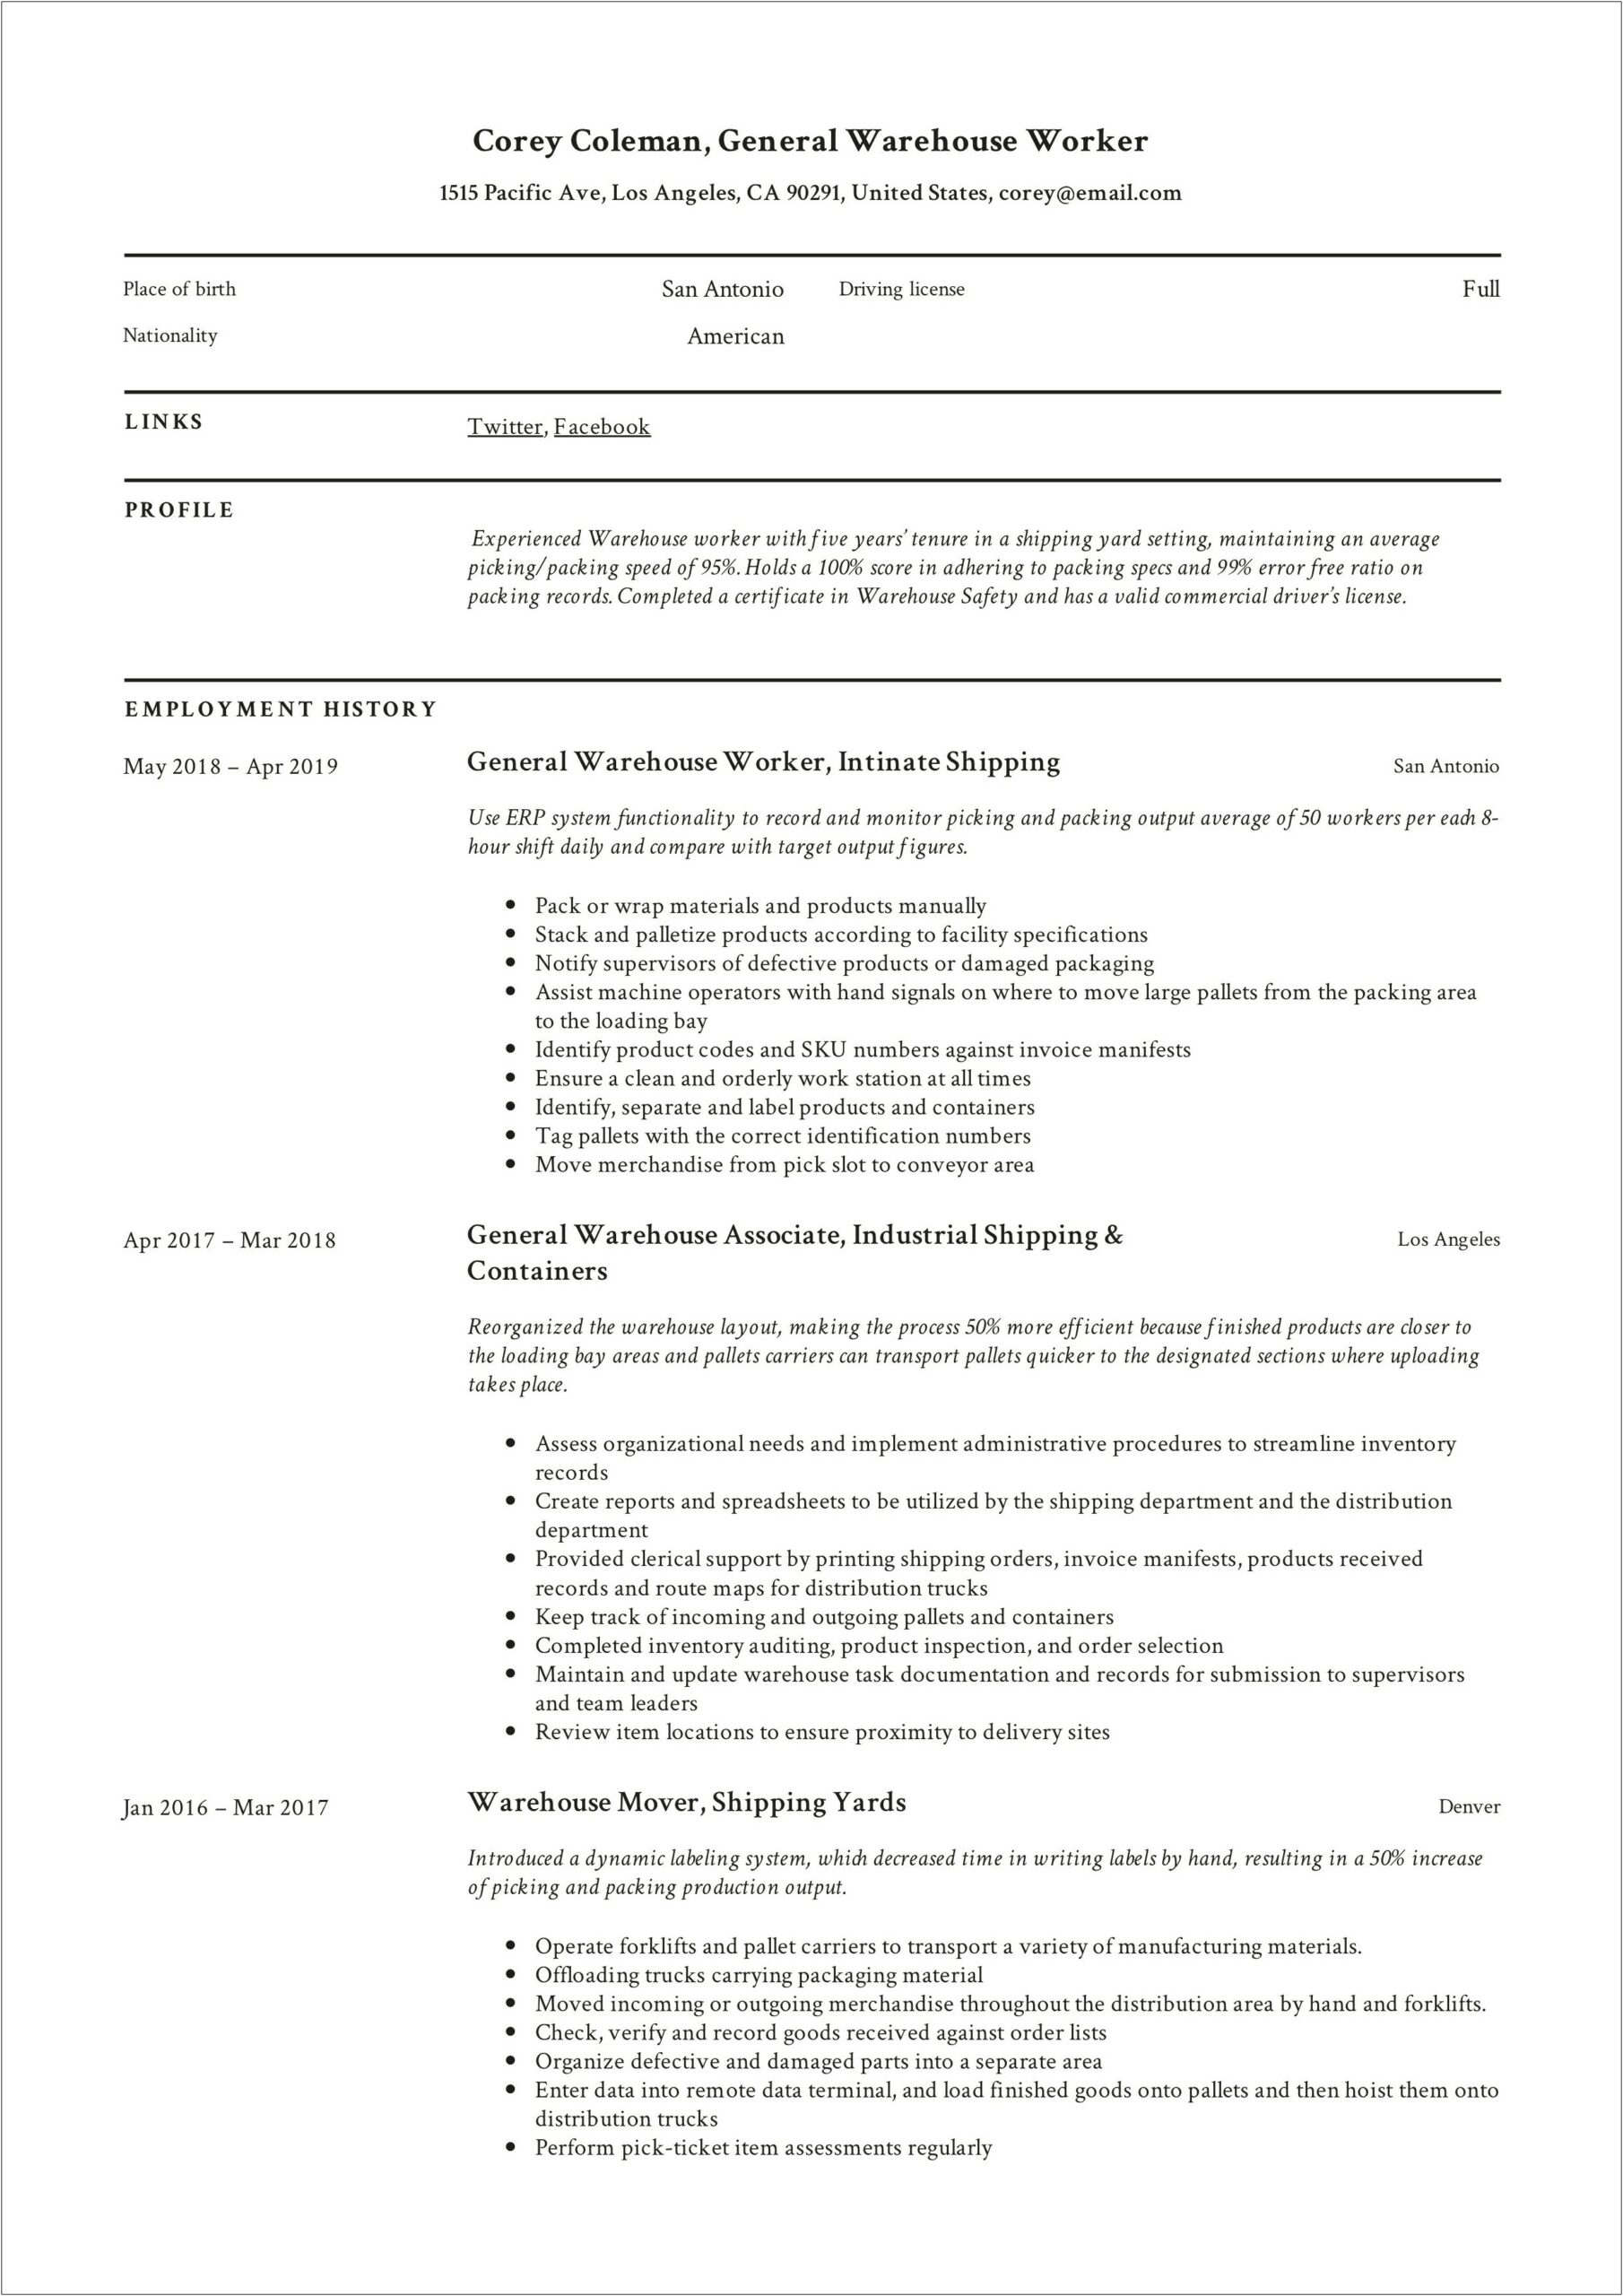 Resume Job Description For Warehouse Worker